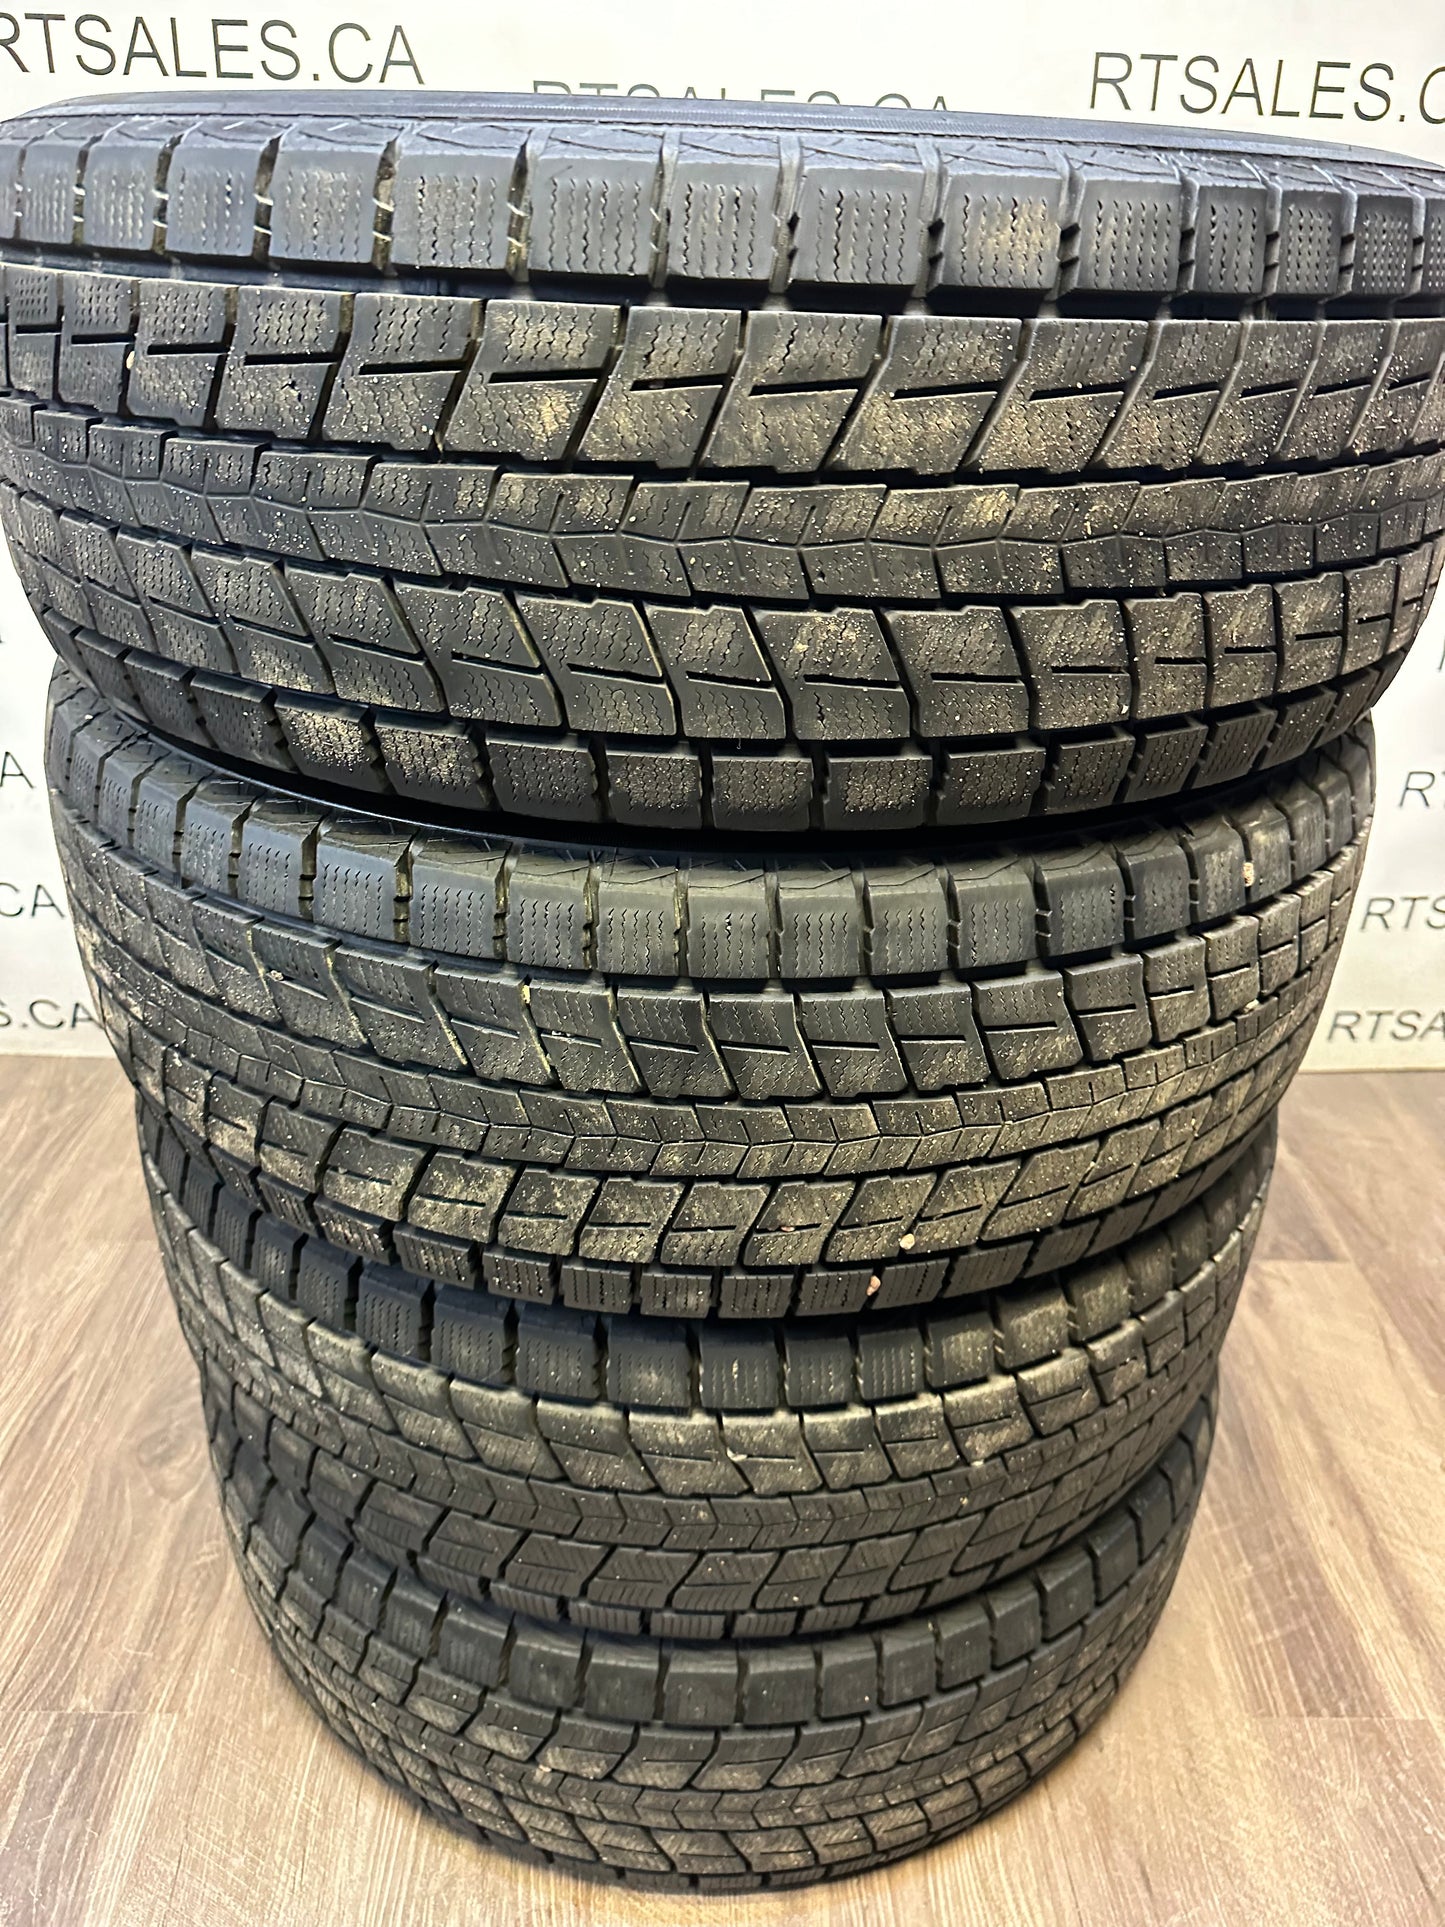 275/65/18 Dunlop WinterMaxx SJ8 Winter Tires (Used)